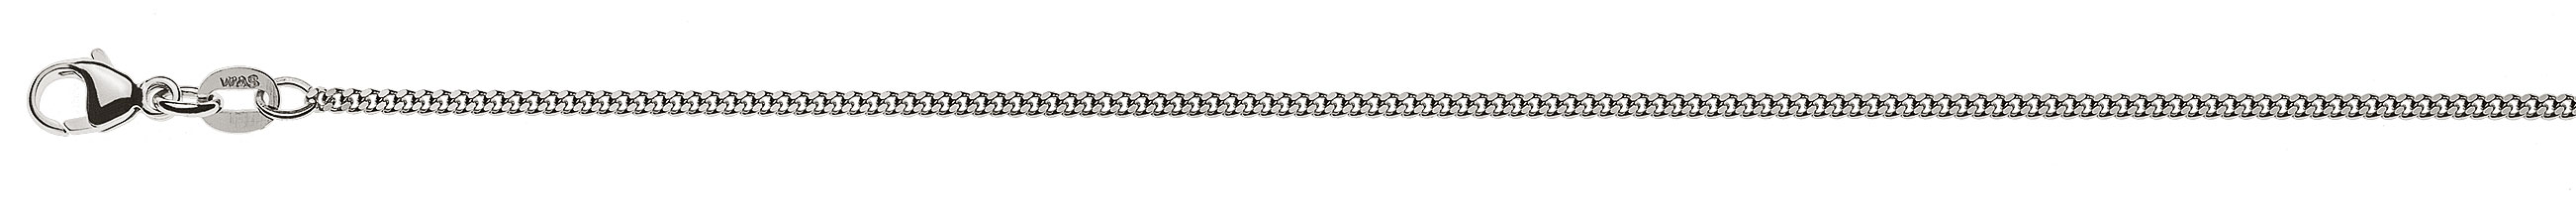 AURONOS Prestige Necklace white gold 18K curb chain polished 40cm 1.6mm